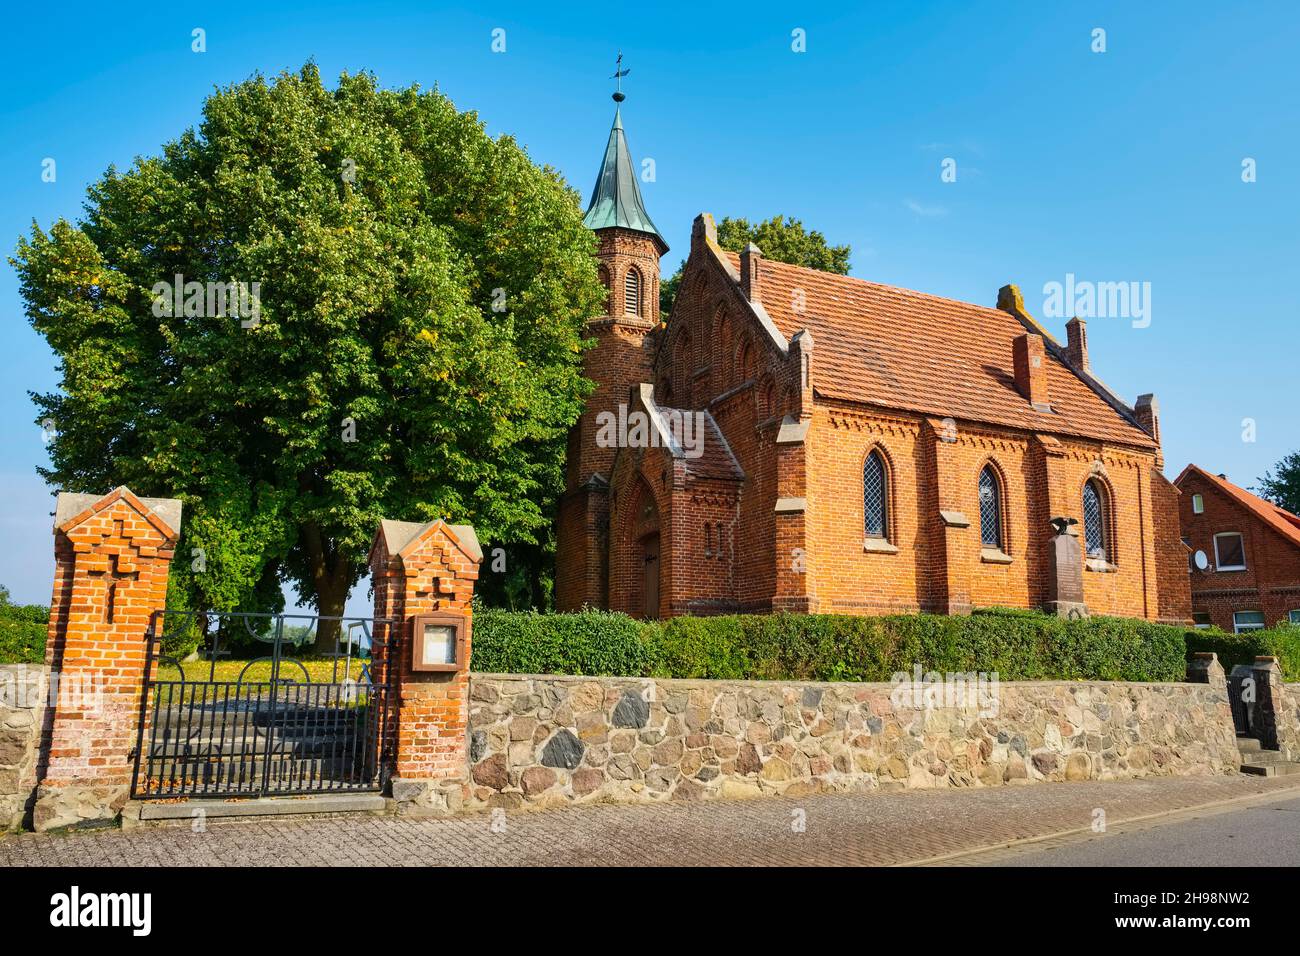 Village church Paarsch, Rom, Mecklenburg-Western Pomerania, Germany Stock Photo